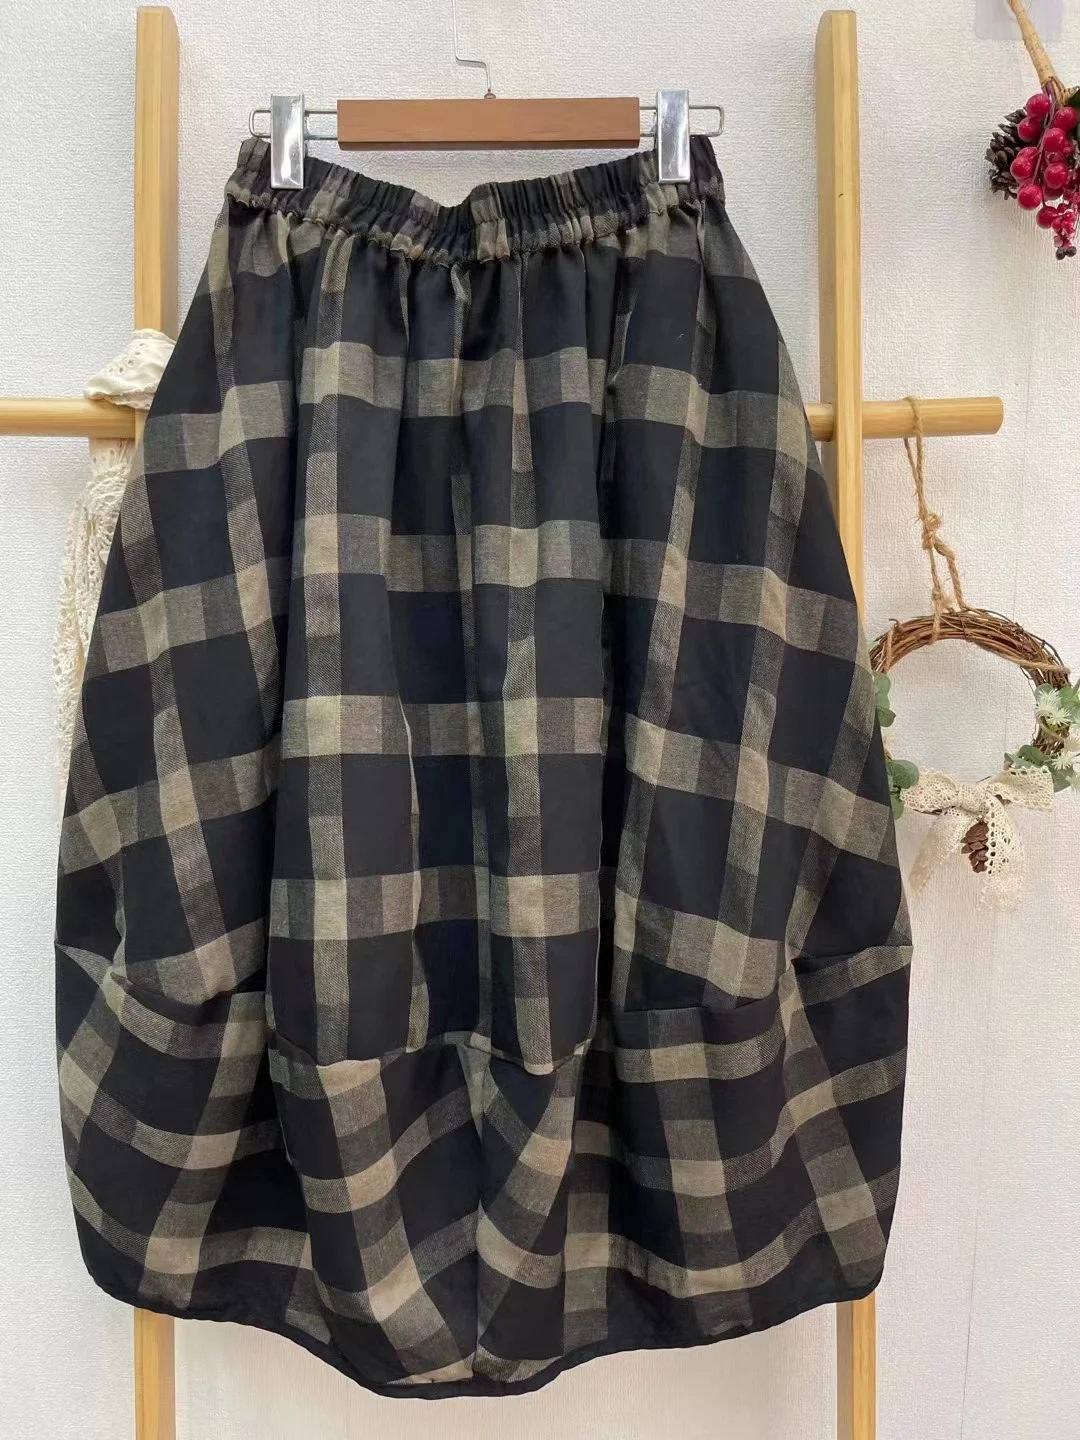 Japanese plaid cotton bract skirt art half skirt